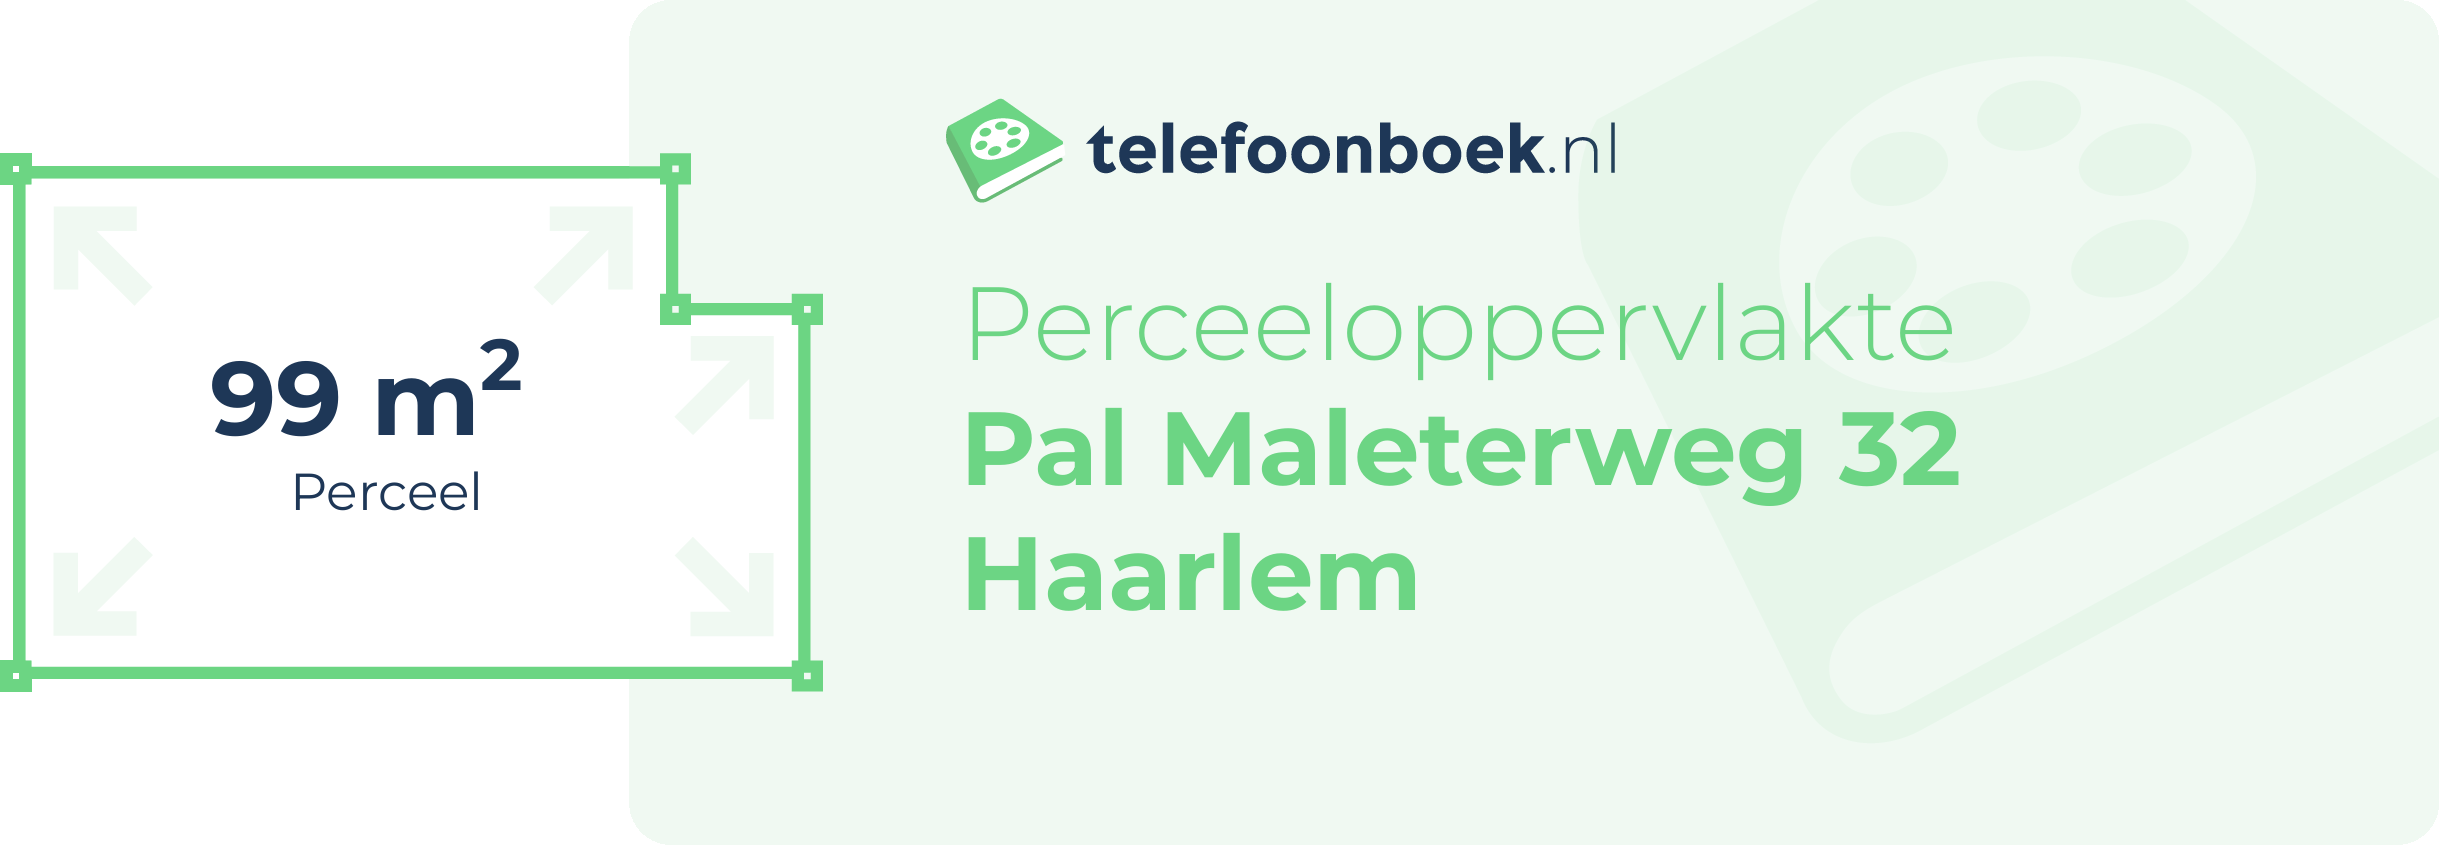 Perceeloppervlakte Pal Maleterweg 32 Haarlem